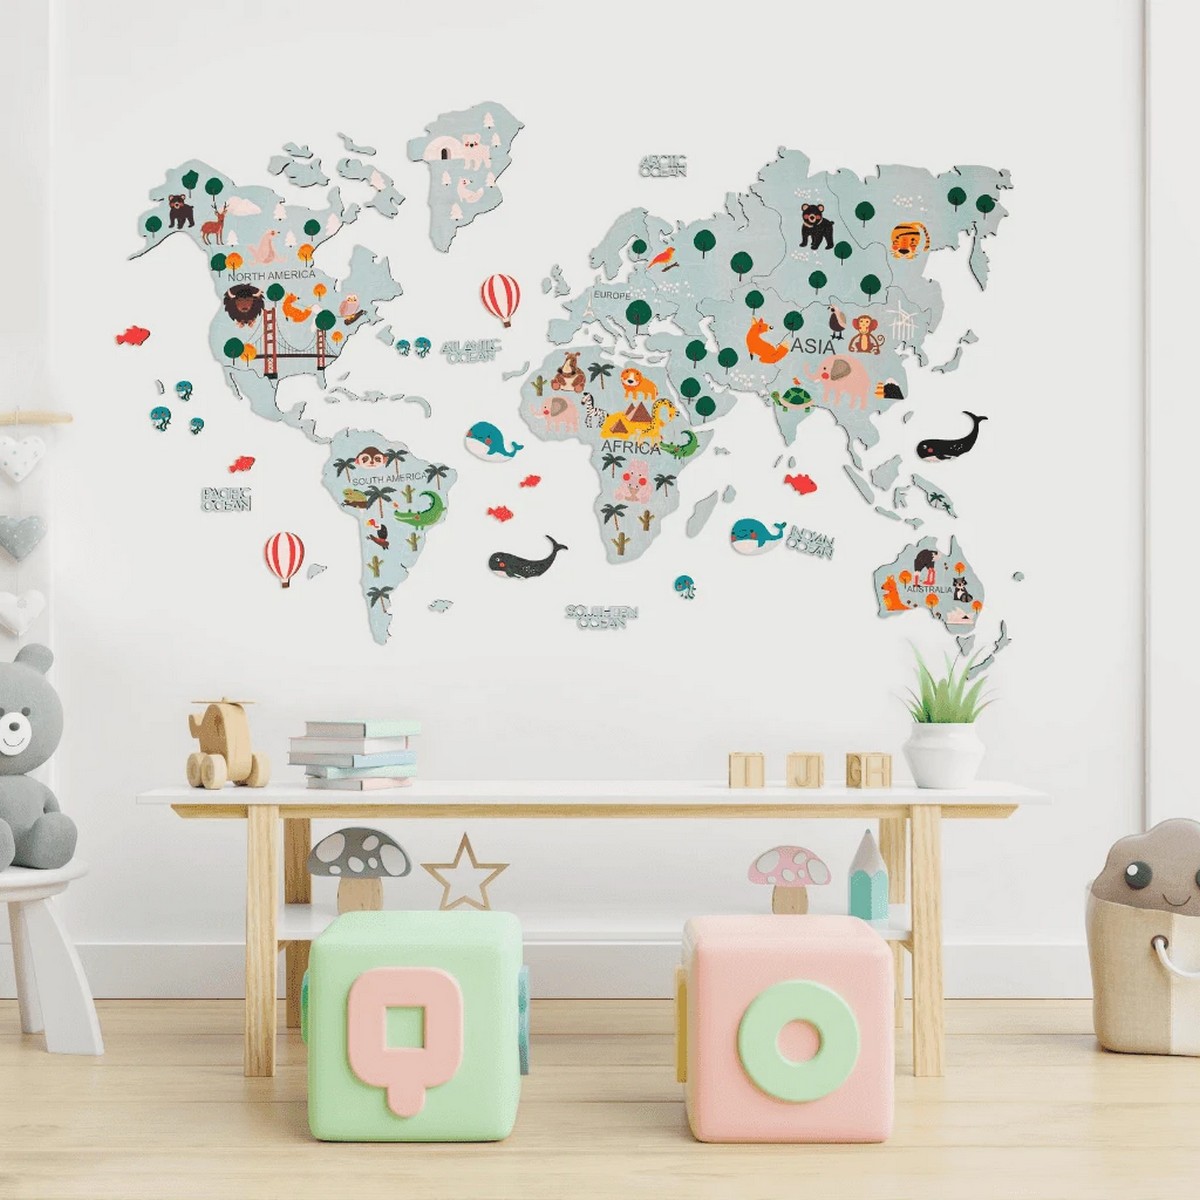 peta dunia kanak-kanak di dinding